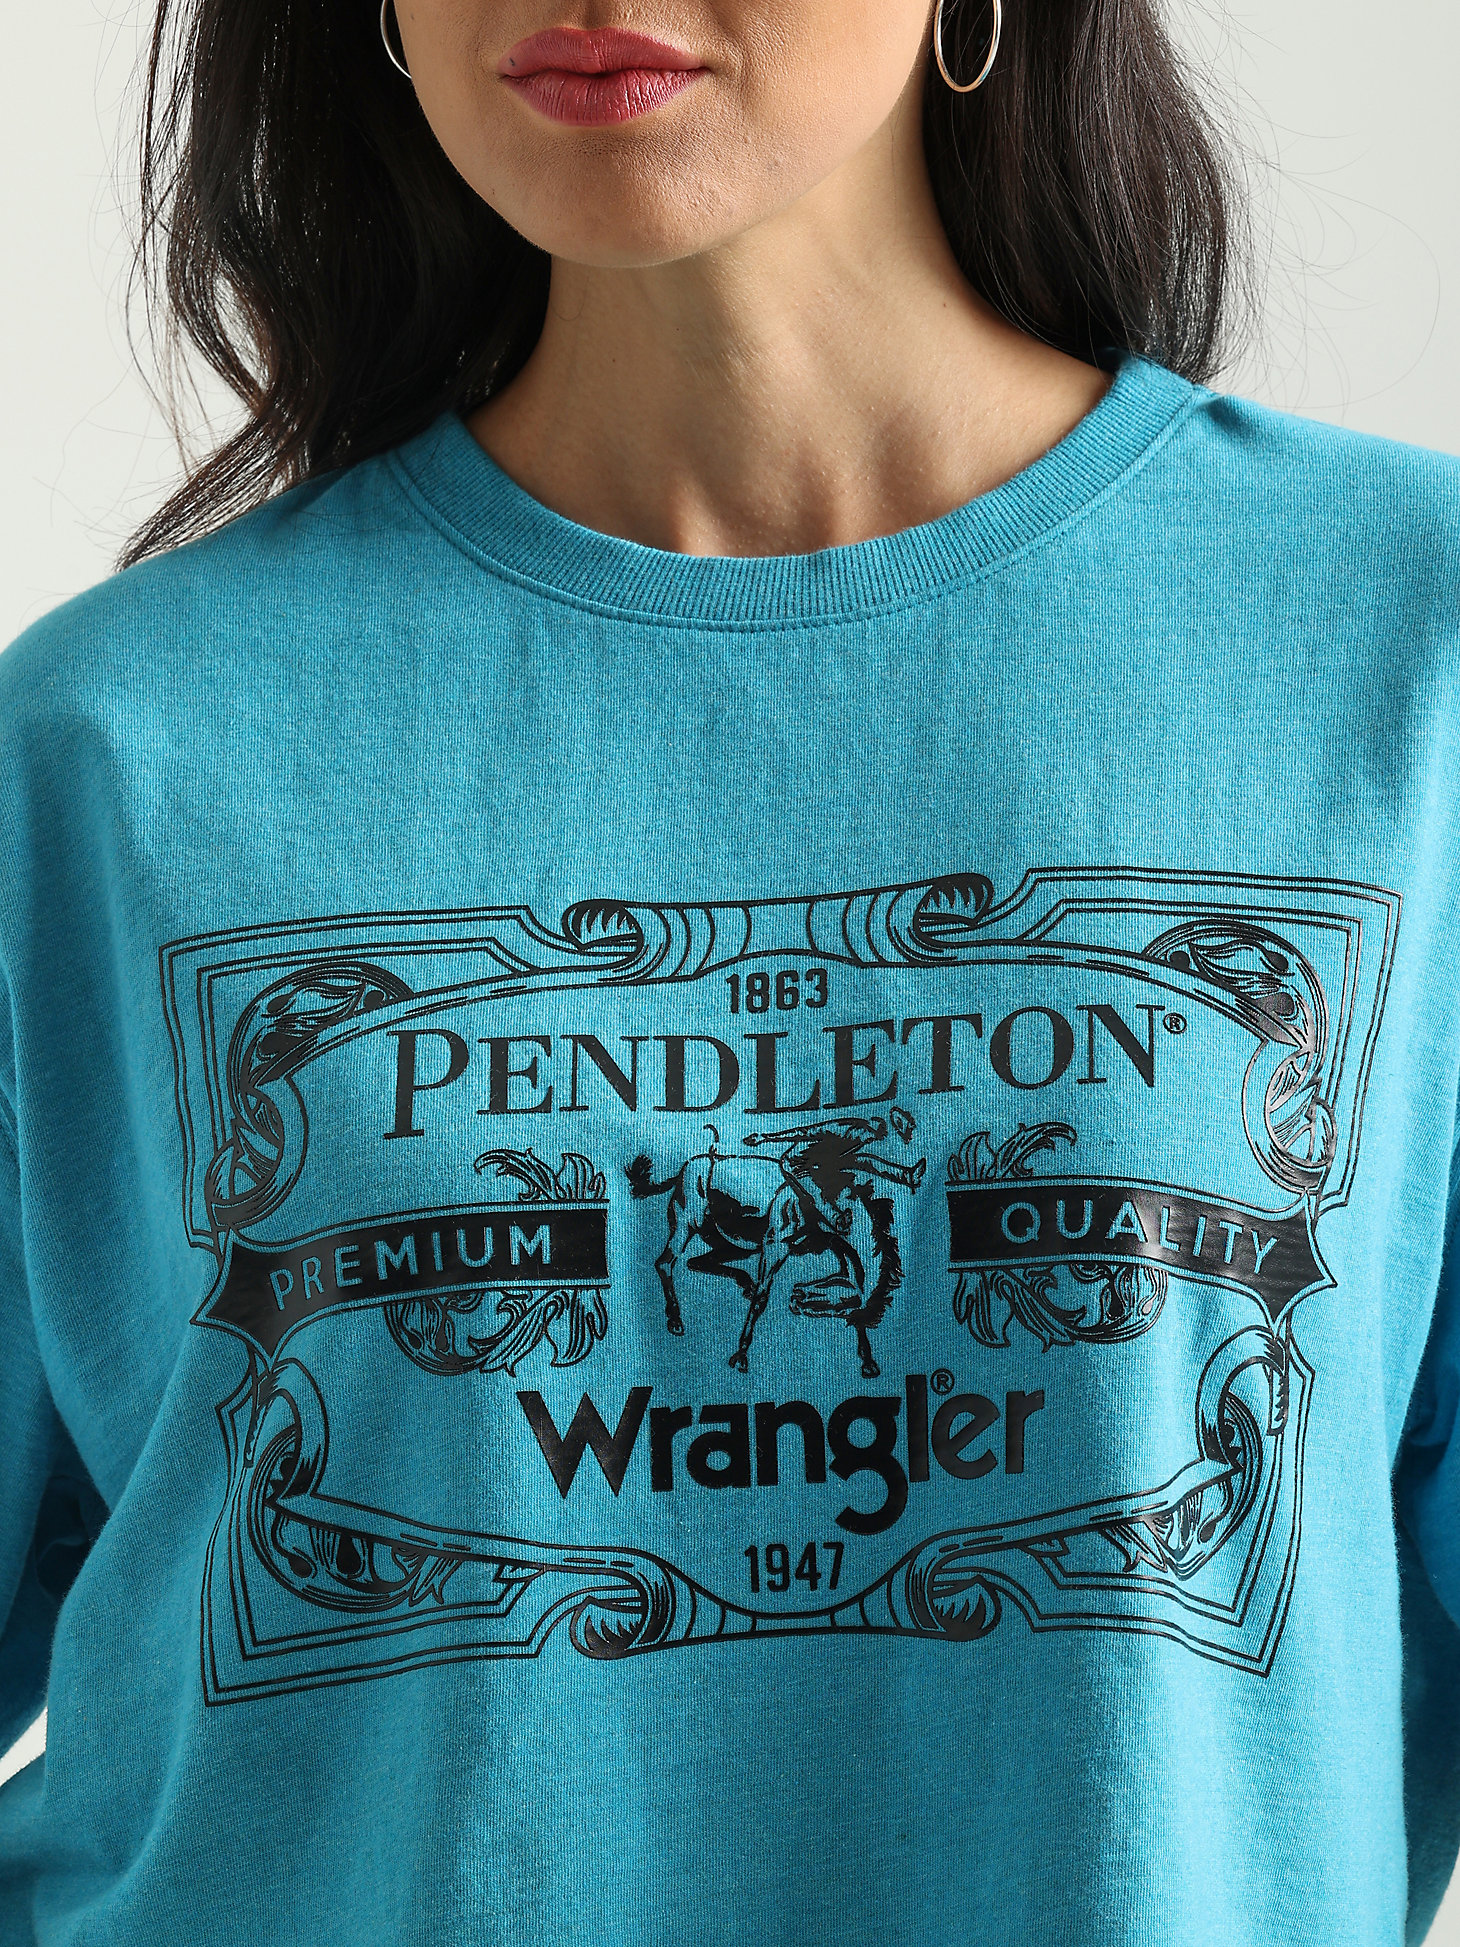 Wrangler x Pendleton Women's Logo Crop Tee in Blue alternative view 2